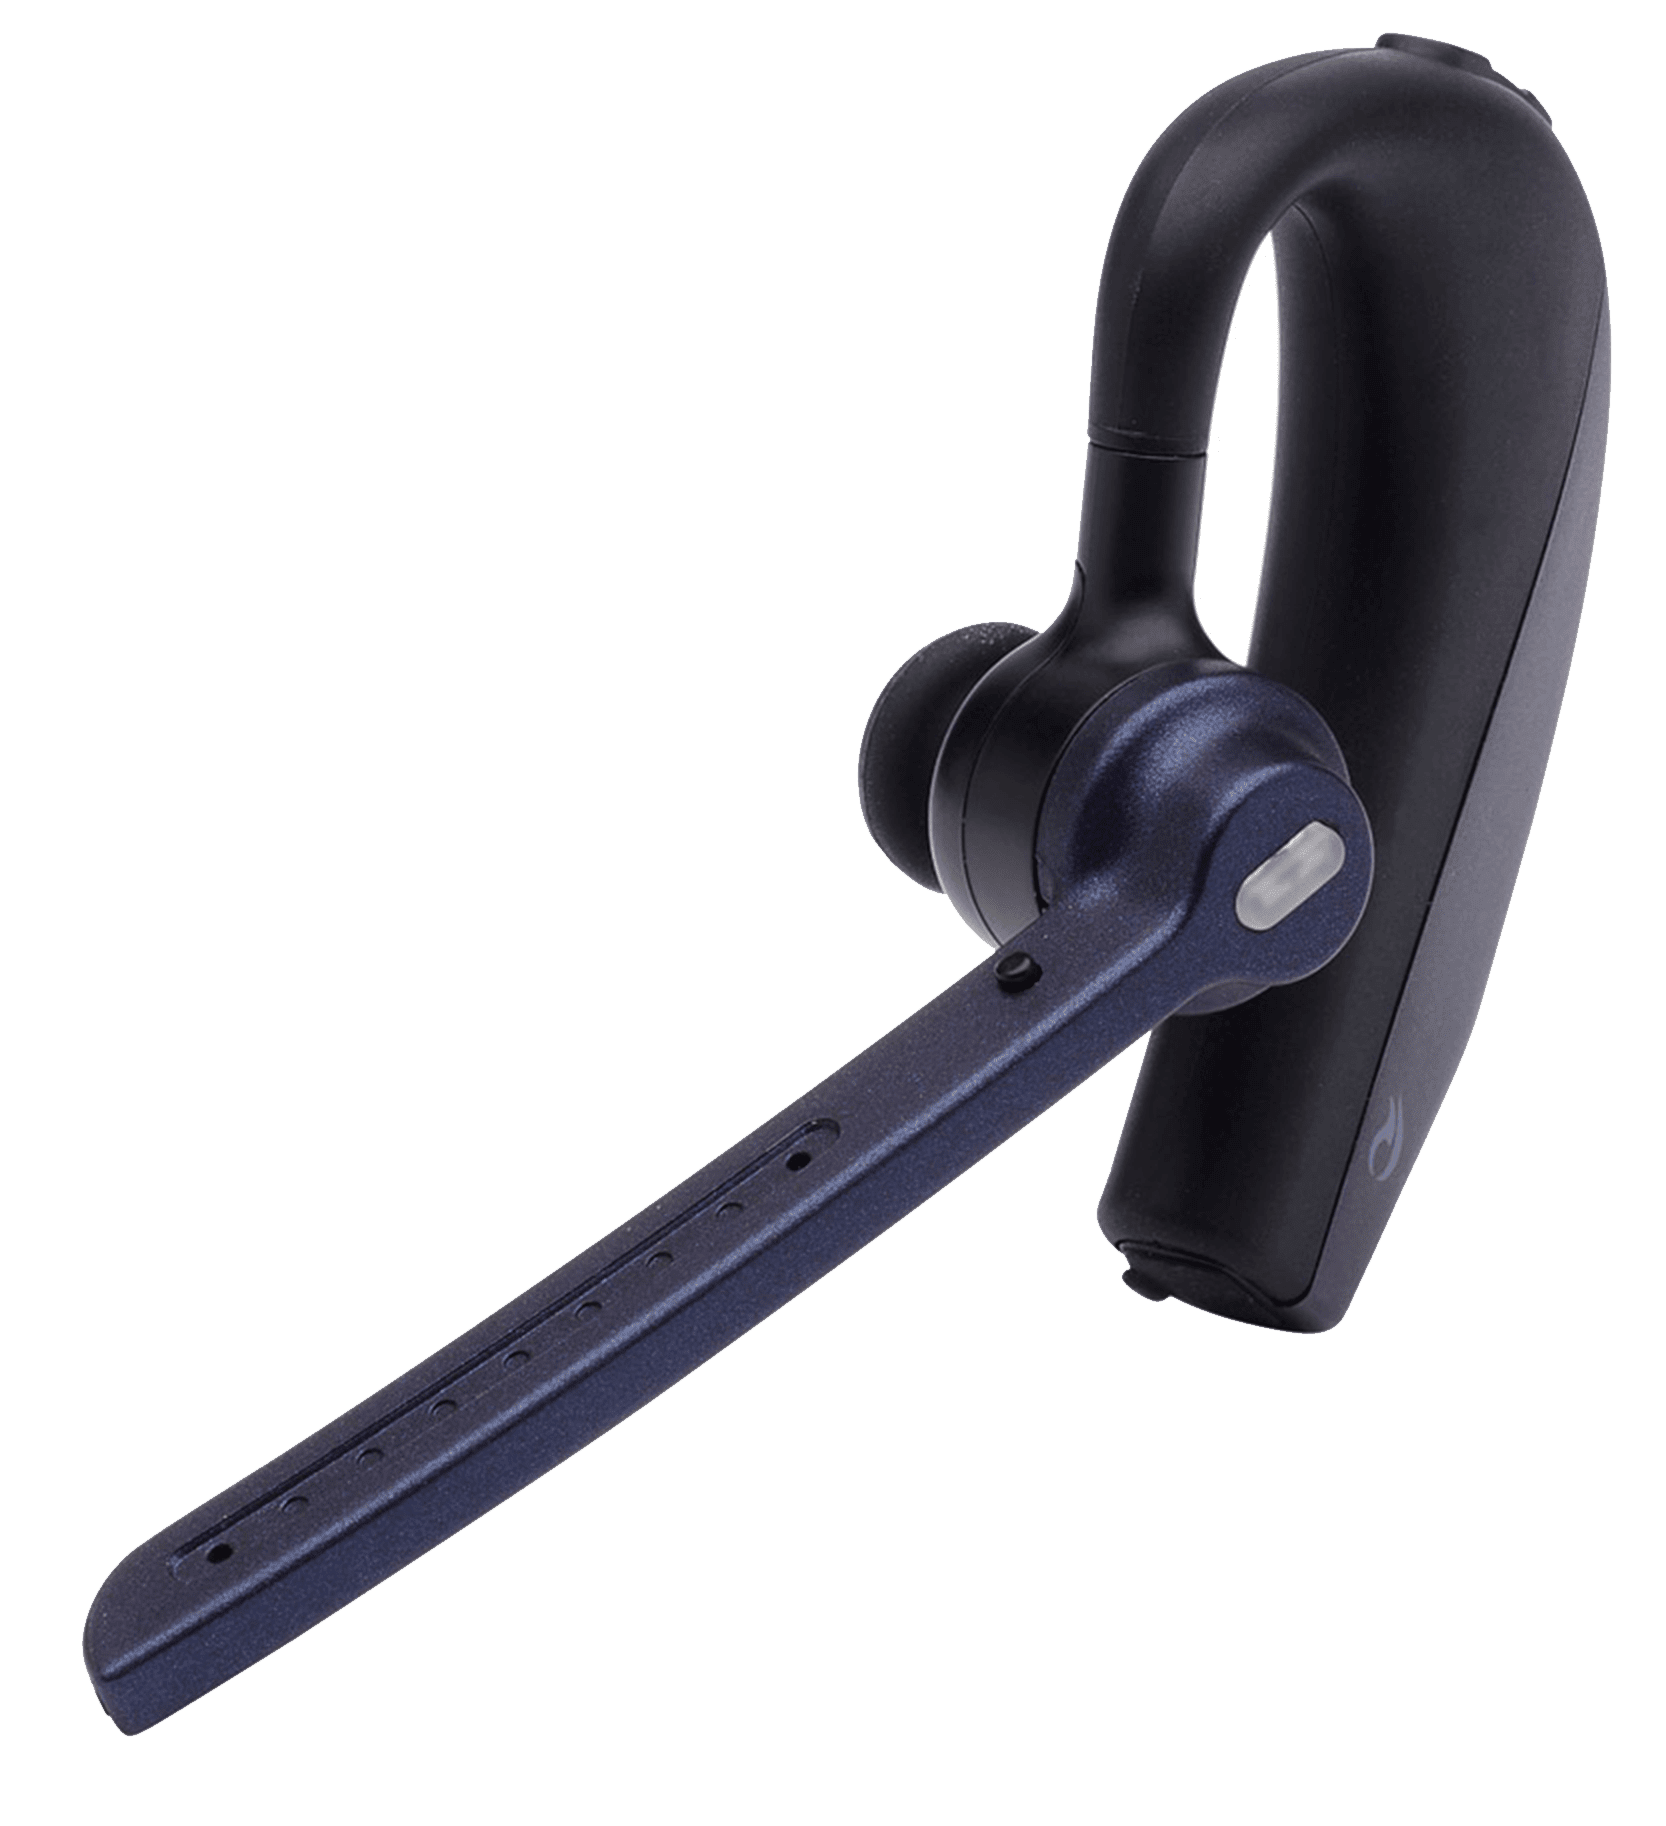 Nuance Dragon Bluetooth draadloze headset-II